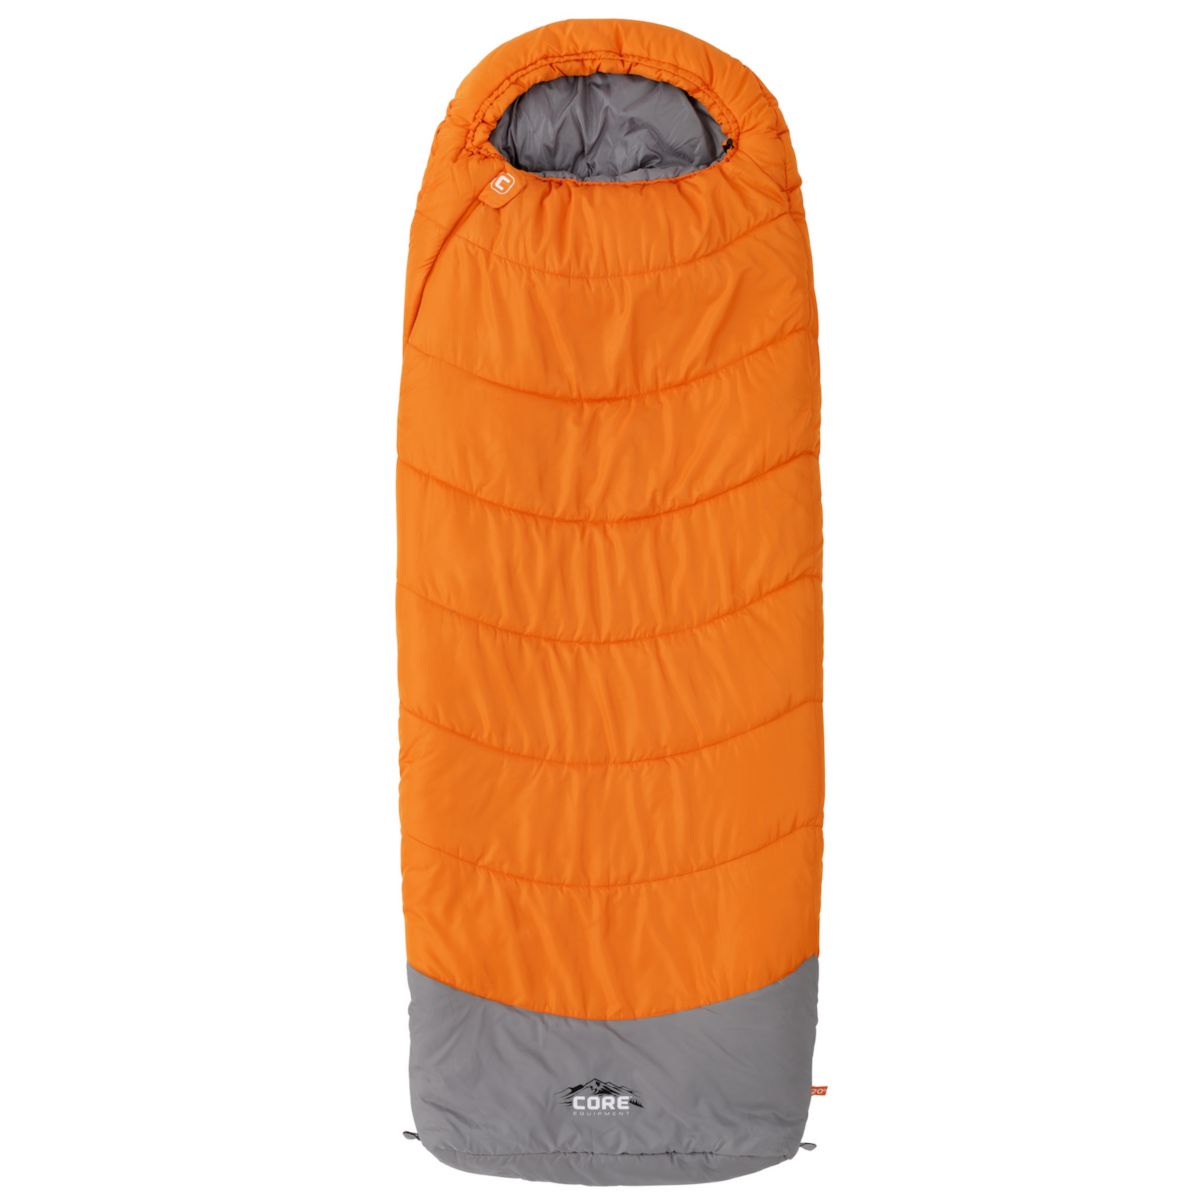 CORE 20°F Hybrid Sleeping Bag CORE